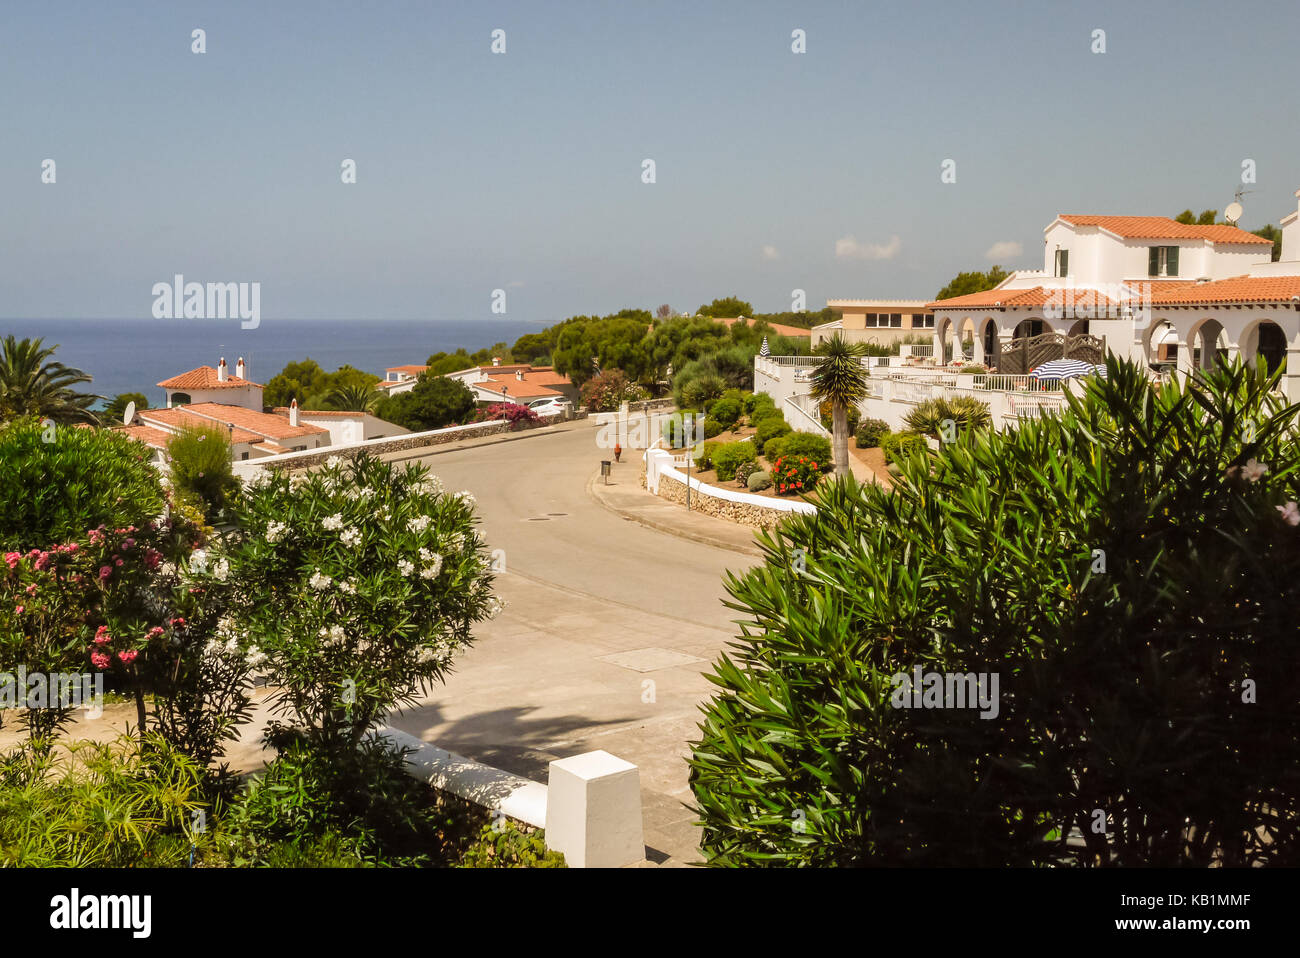 Overlooking the Villas of Santo Tomas, Menorca Stock Photo